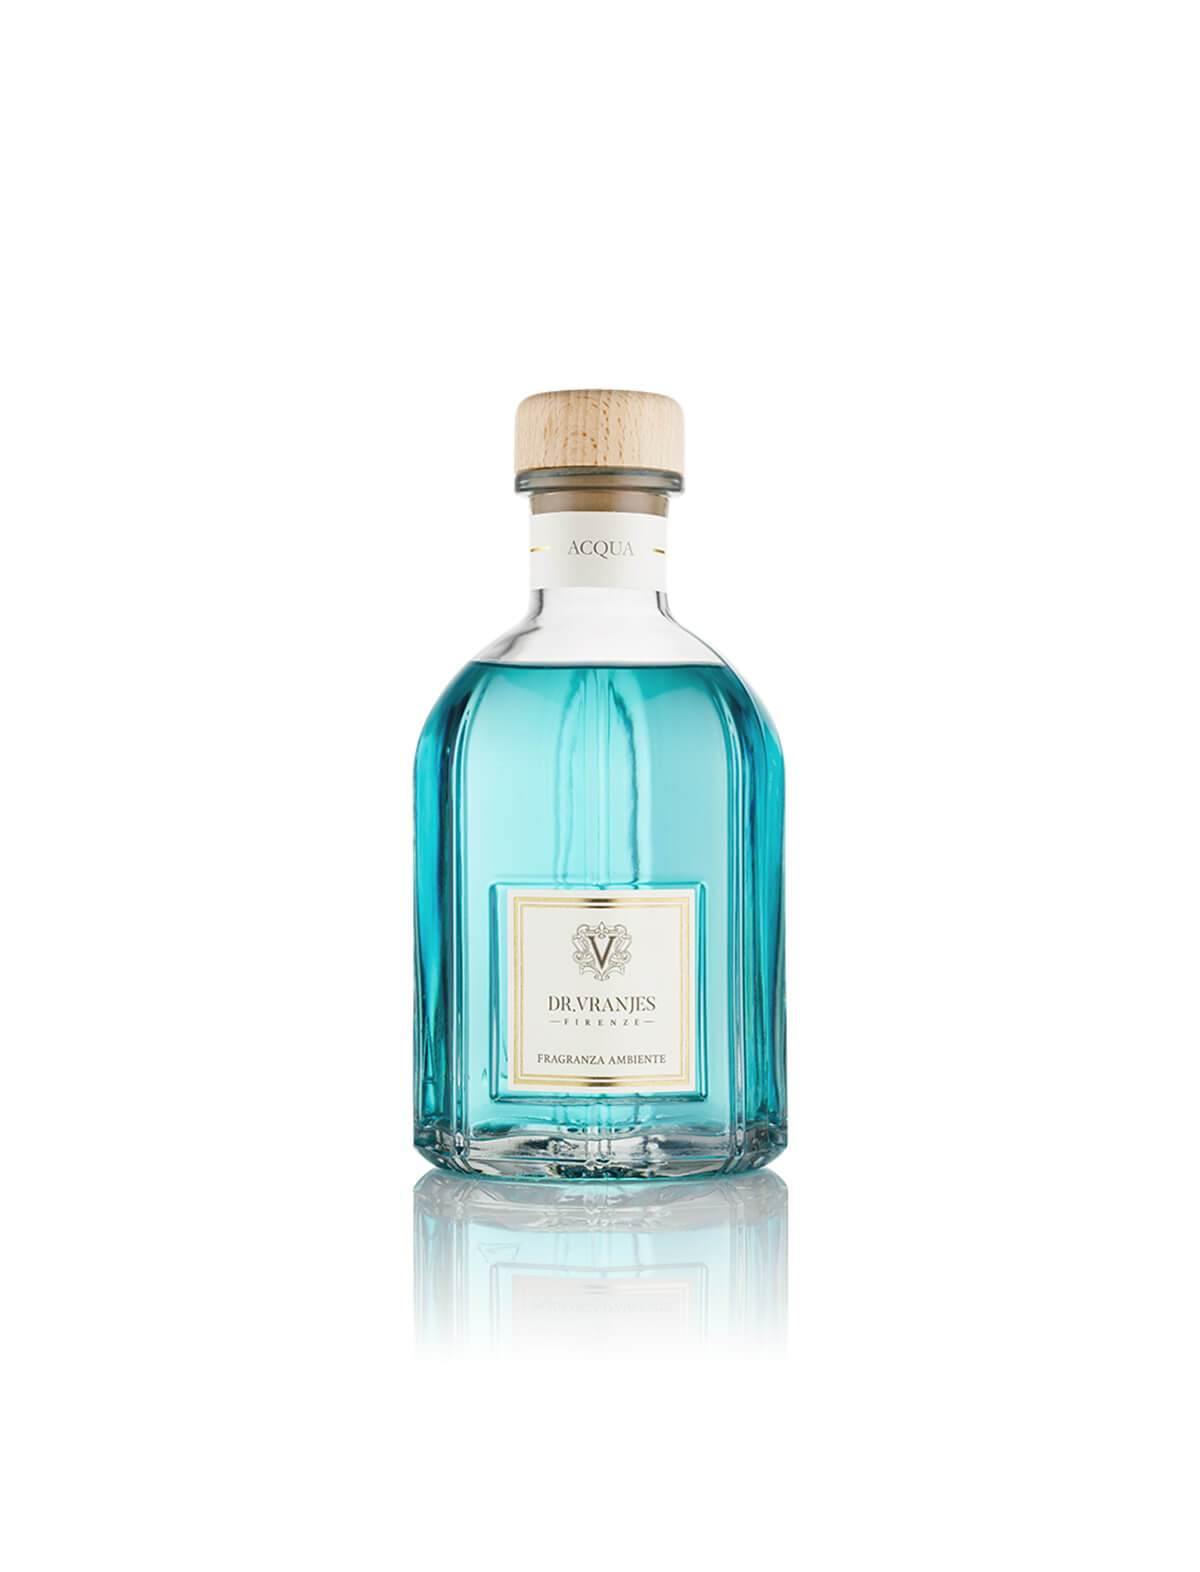 DR. VRANJES Home Fragrance in Acqua | CLOSET Singapore